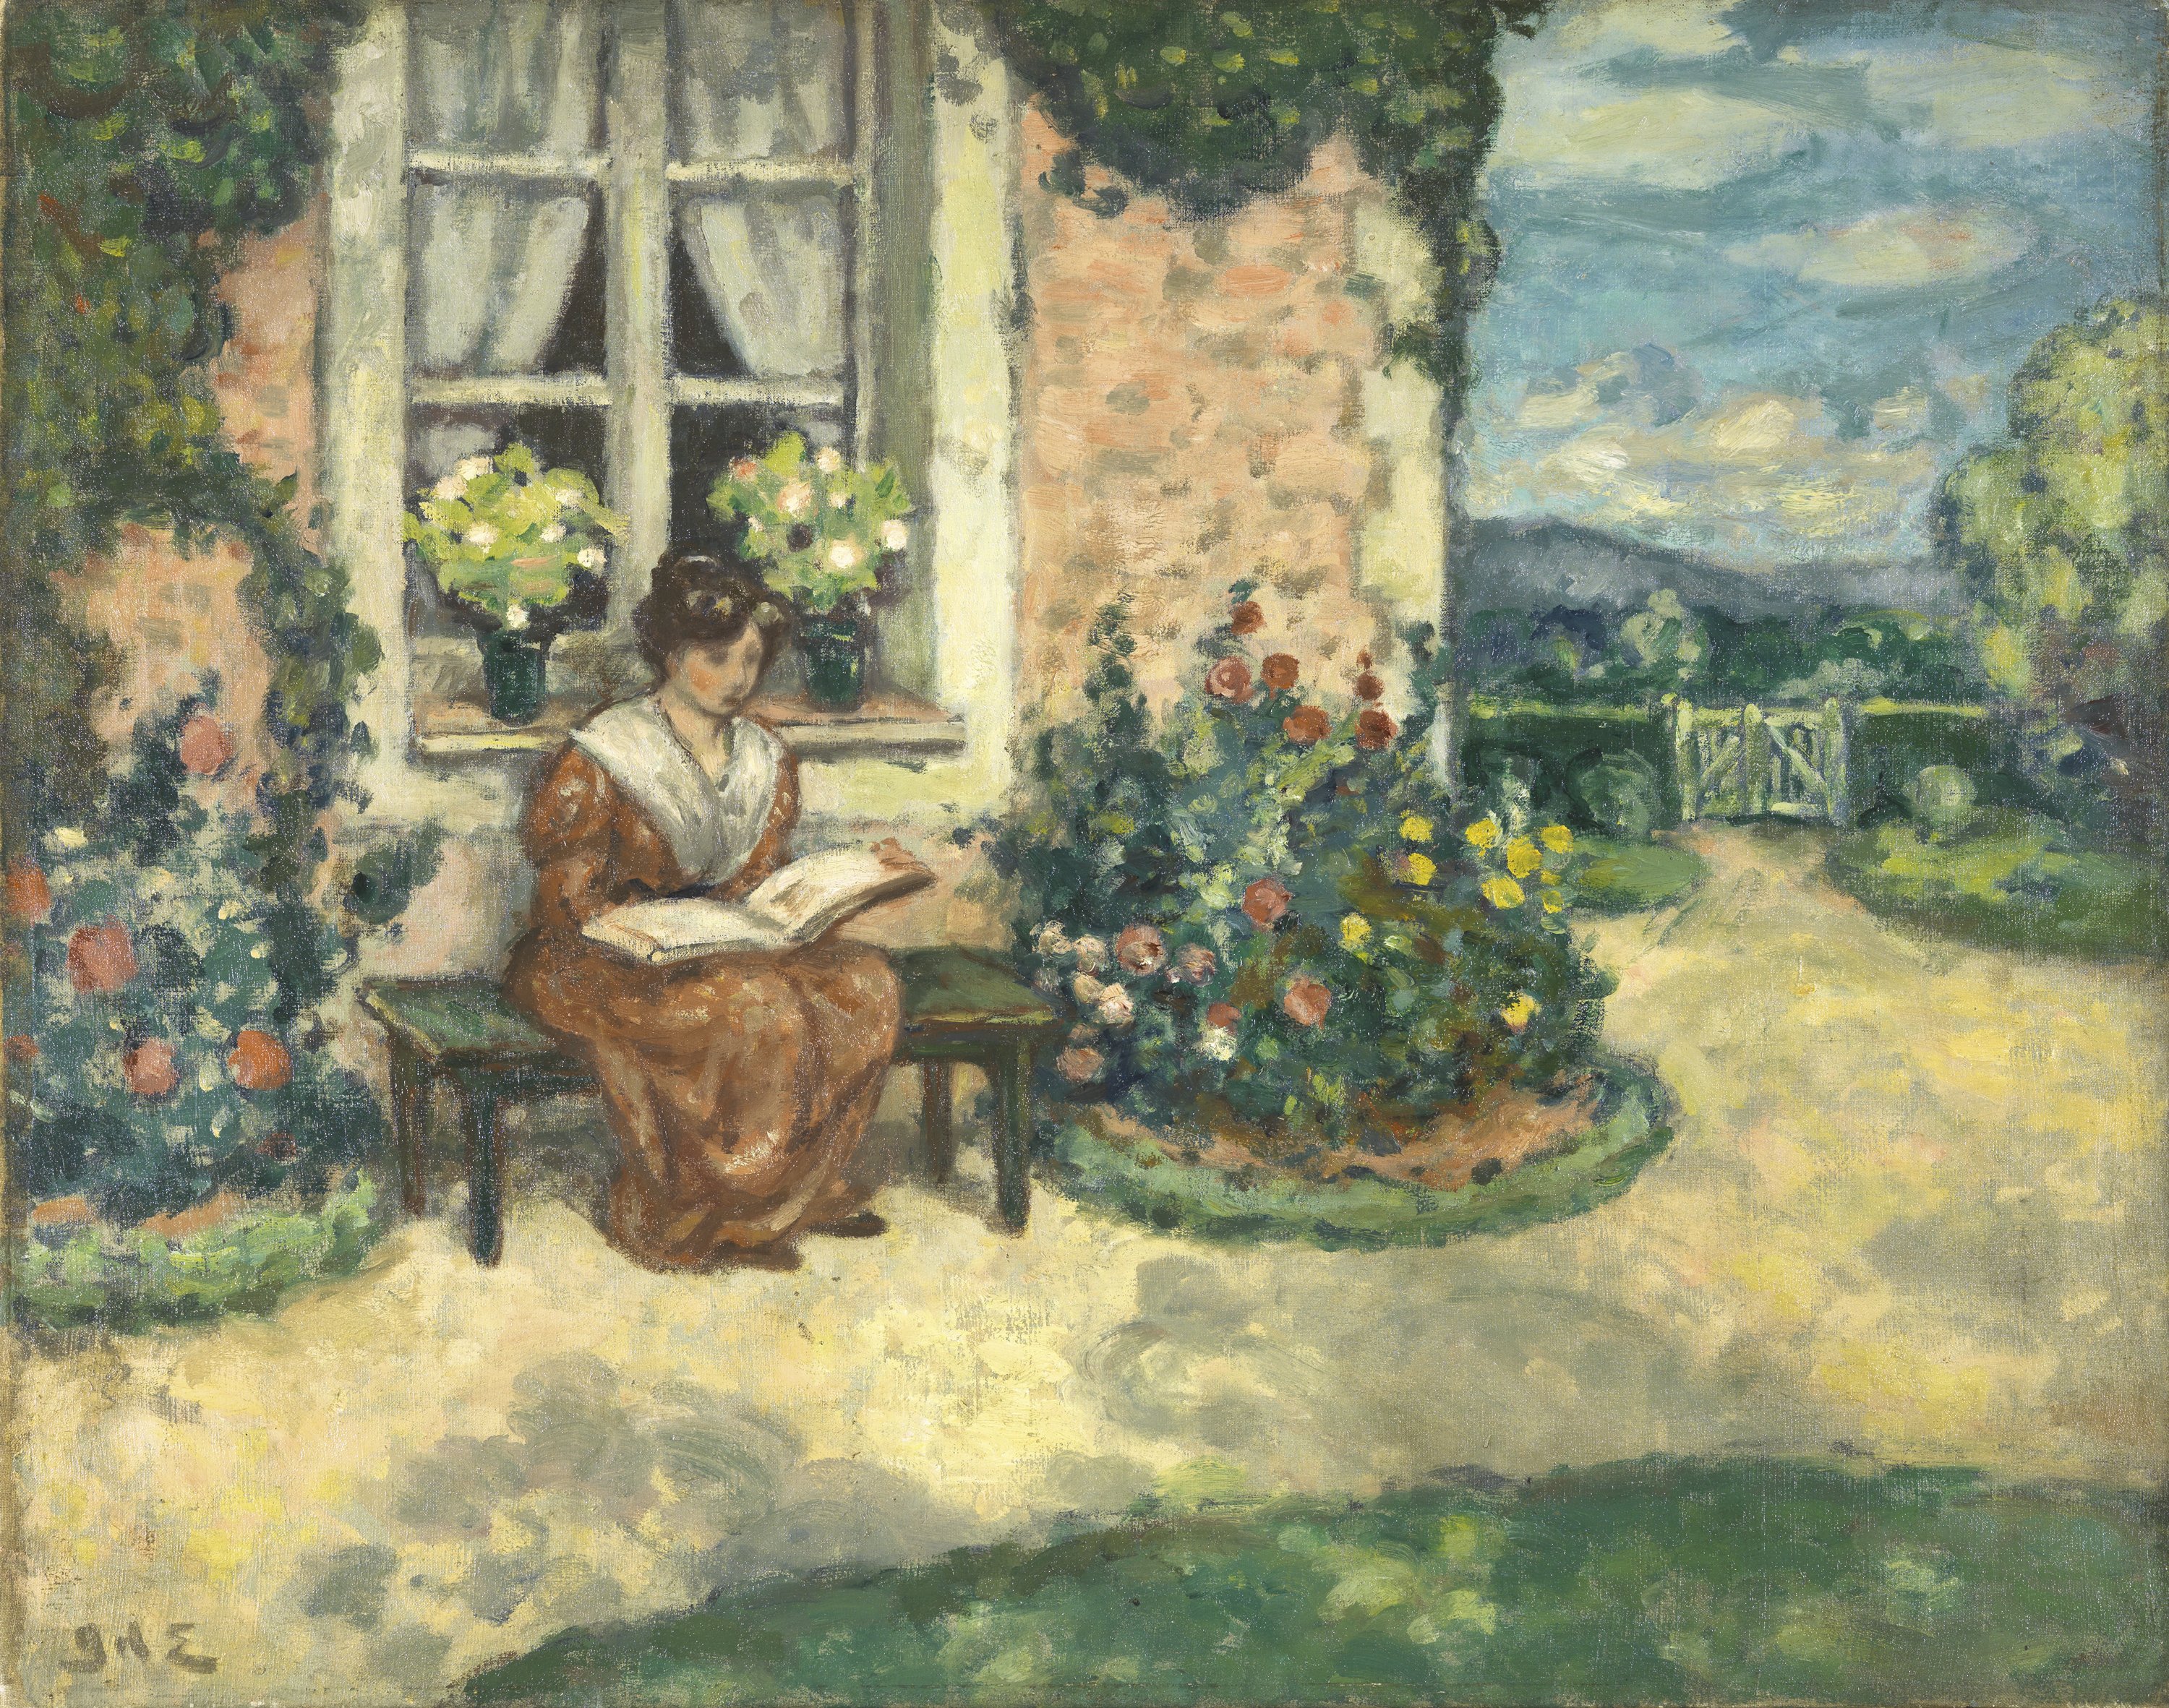 Simone. Simone, c. 1907